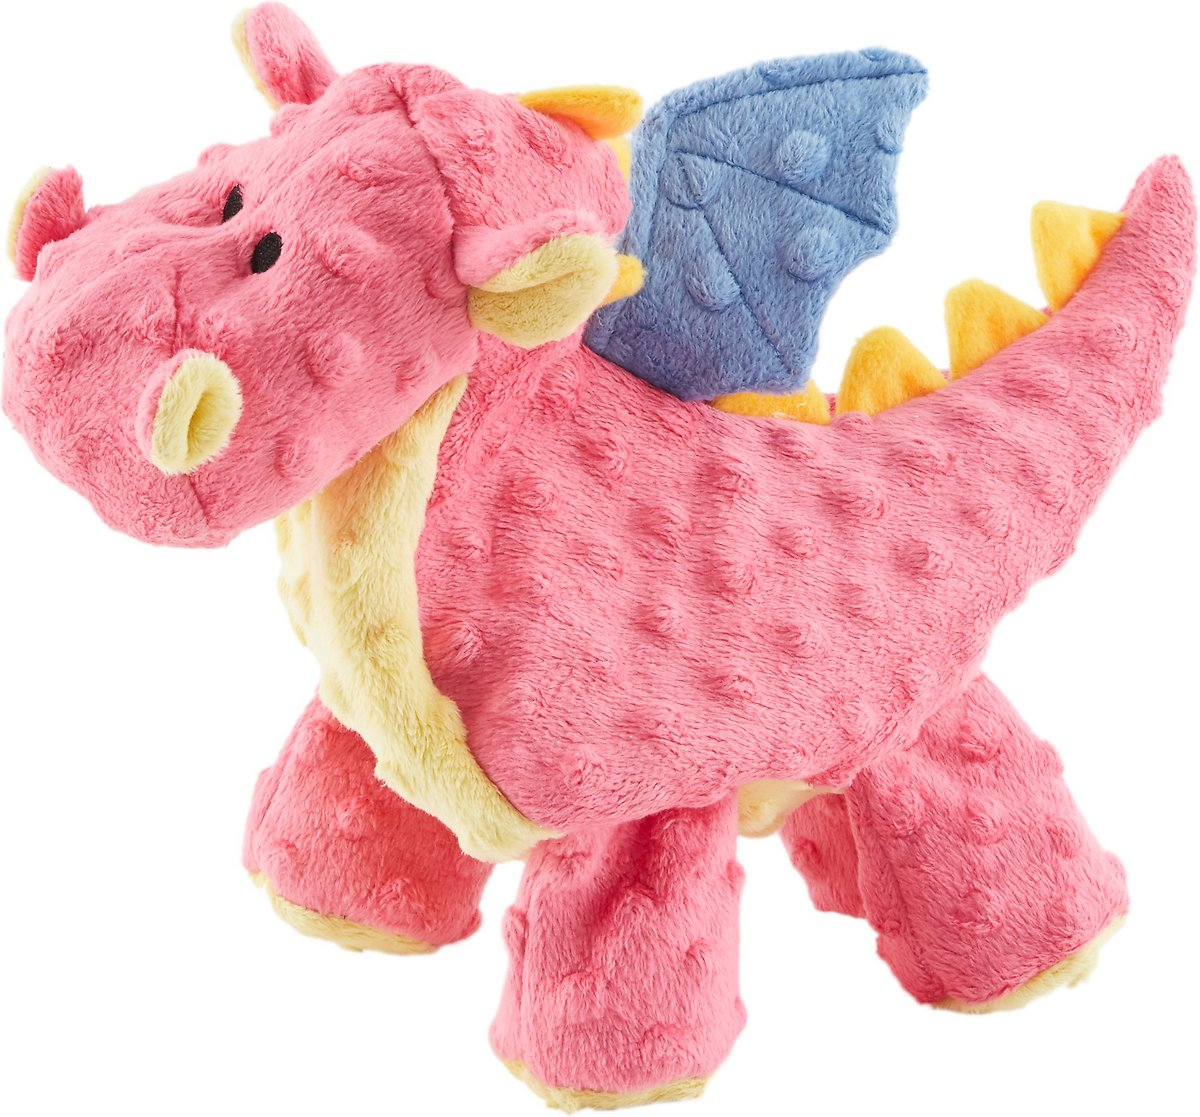 GoDogs’ Dragon Plush Dog Squeaky Toy